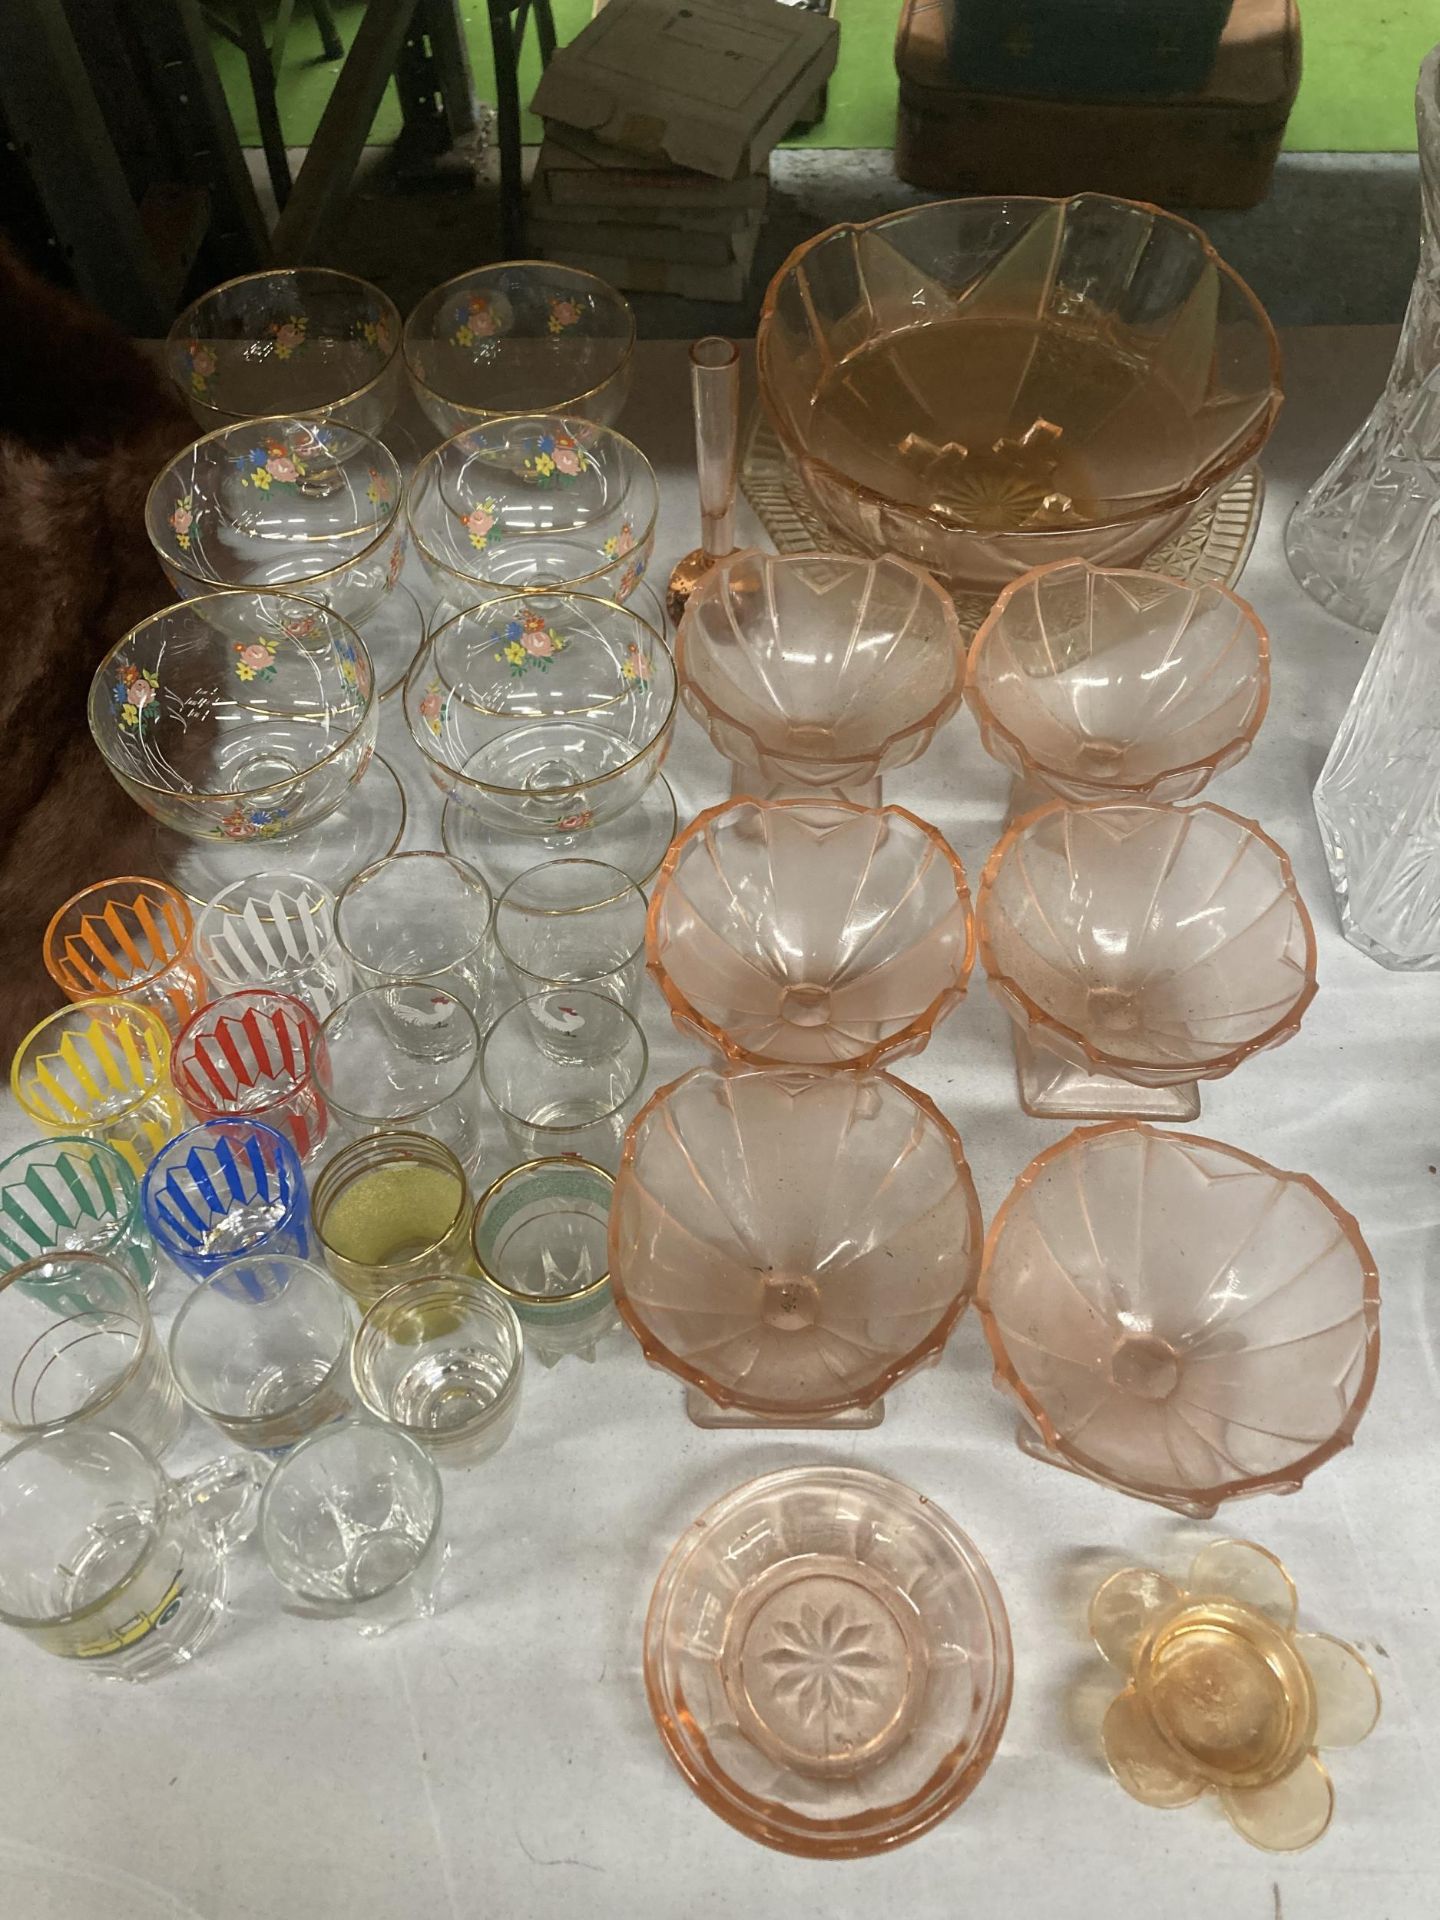 A QUANTITY OF VINTAGE GLASSWARE TO INCLUDE A TRIFLE BOWL, DESSERT BOWLS, SHOT GLASSES, ETC